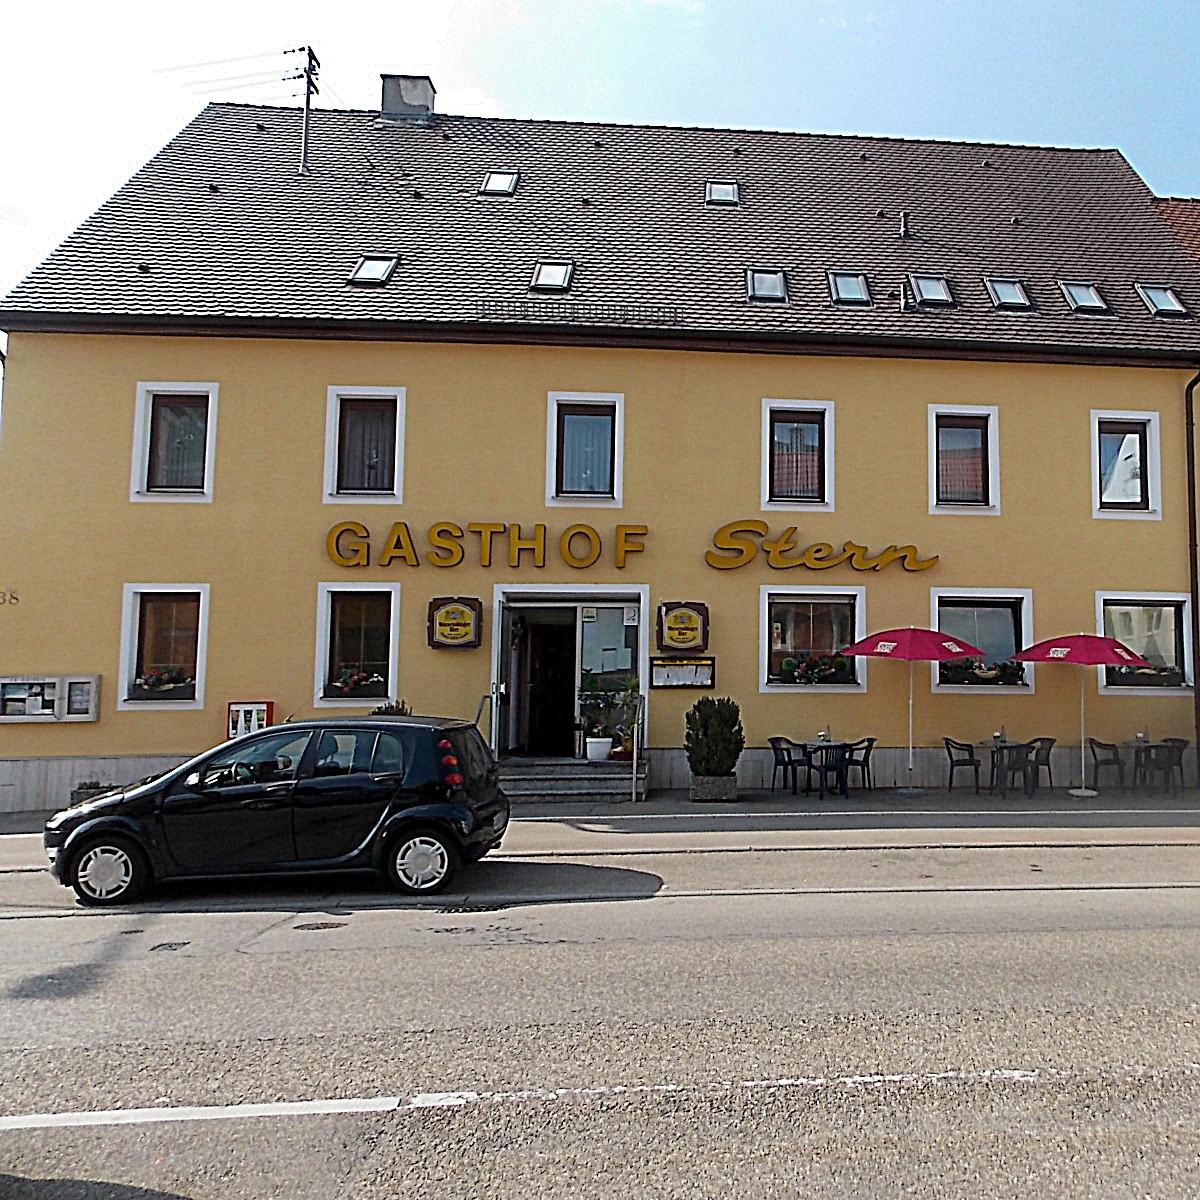 Restaurant "Gasthof Goldener Stern, Inhaber Egon Kindl" in Aalen